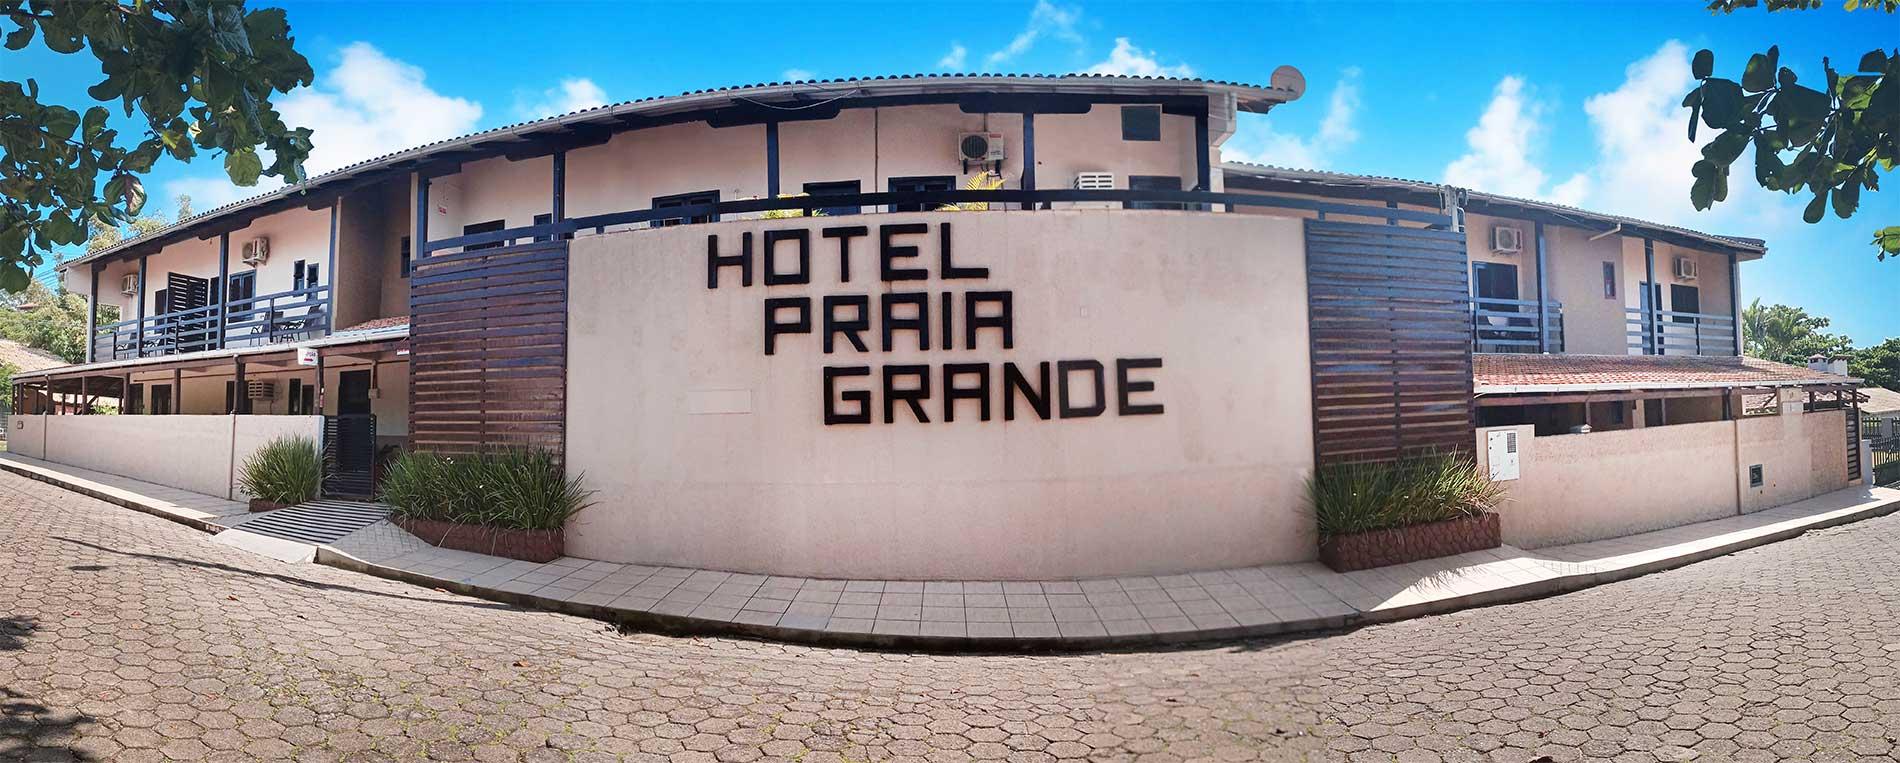 Vista da fachada Hotel Praia Grande